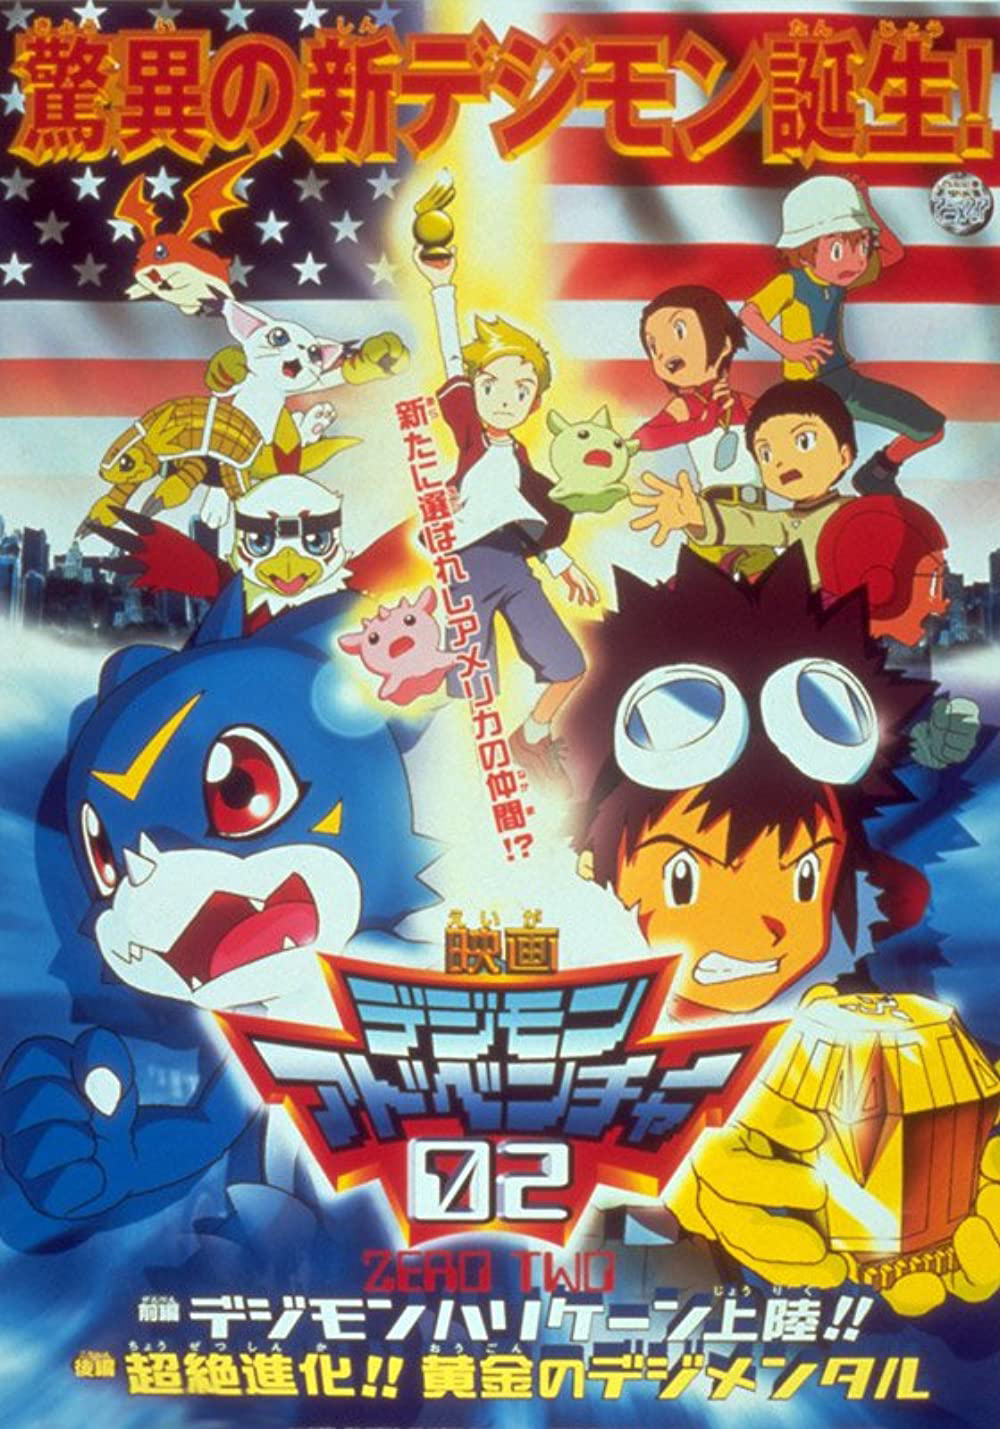 Xem Phim Digimon Adventure 02 - Cơn Bão Digimon Đổ Bộ! Digimental Hoàng Kim! (Digimon Adventure 02 - Hurricane Touchdown! The Golden Digimentals)